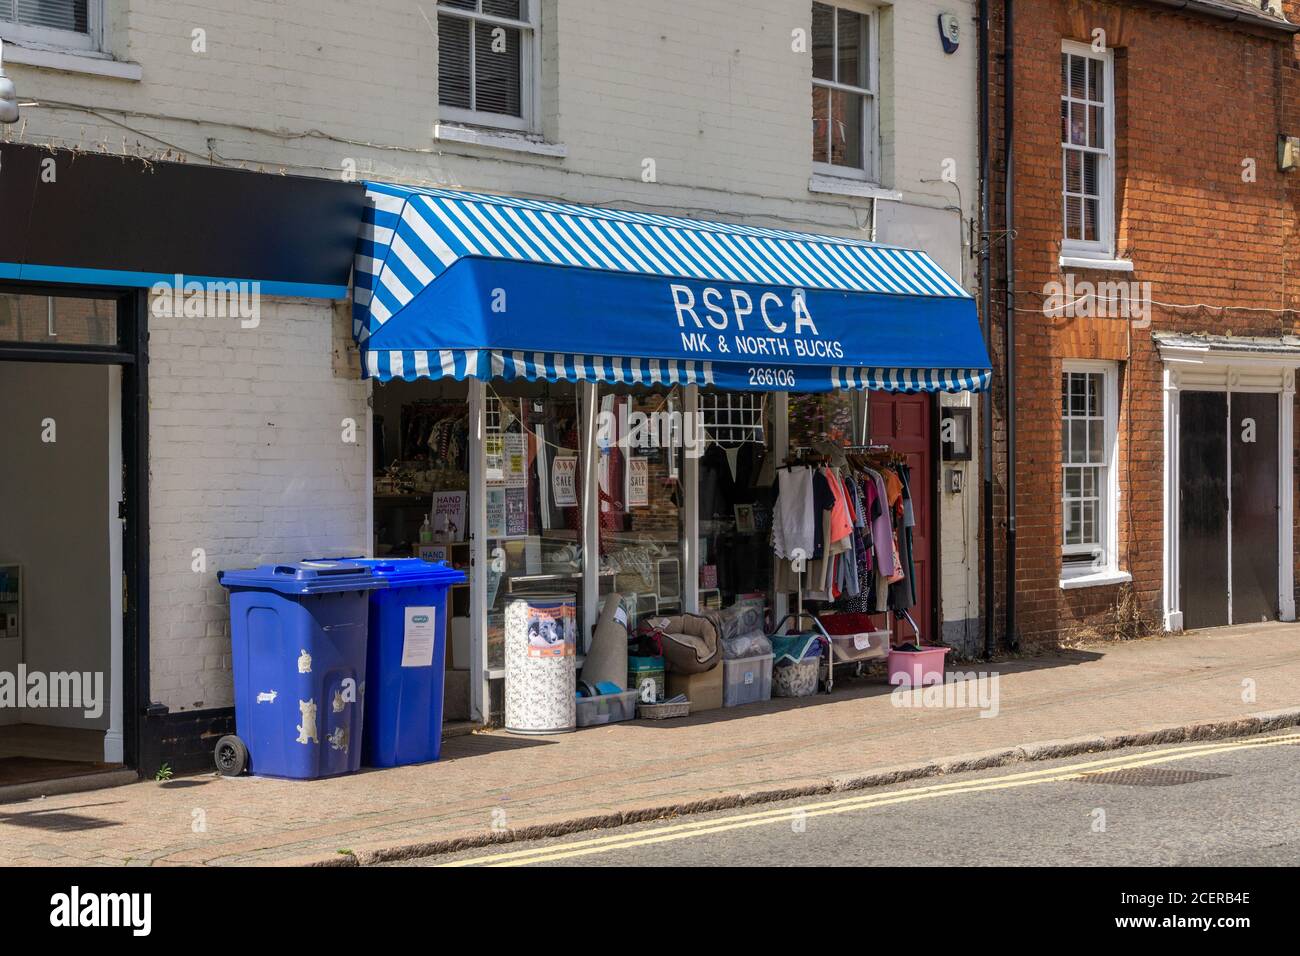 RSPCA charity shop, MK and North Bucks District, Stony Stratford, Buckinghamshire, UK Stock Photo